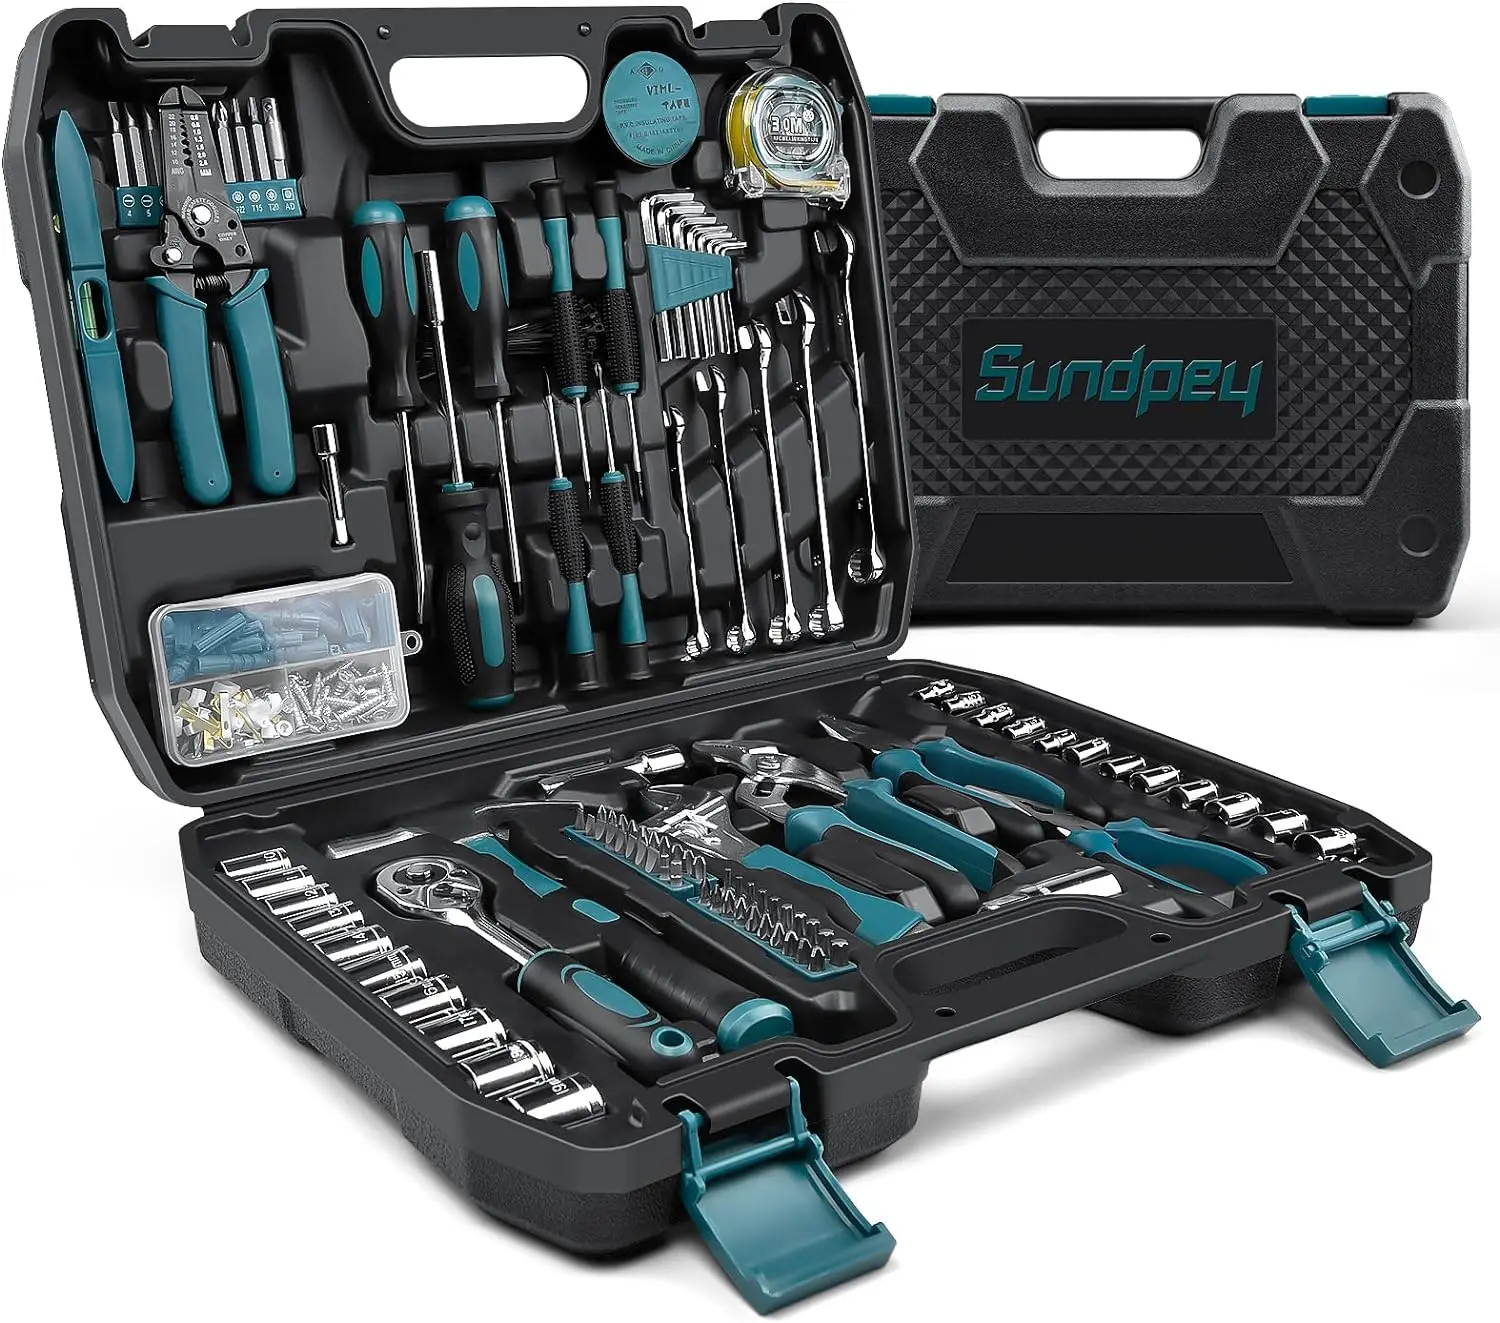 

Sundpey Home Tool Kit 281-PCs - Protable Complete Basic Repair General Hand Tool Sets for Men Women - Full Tool Set with Socket